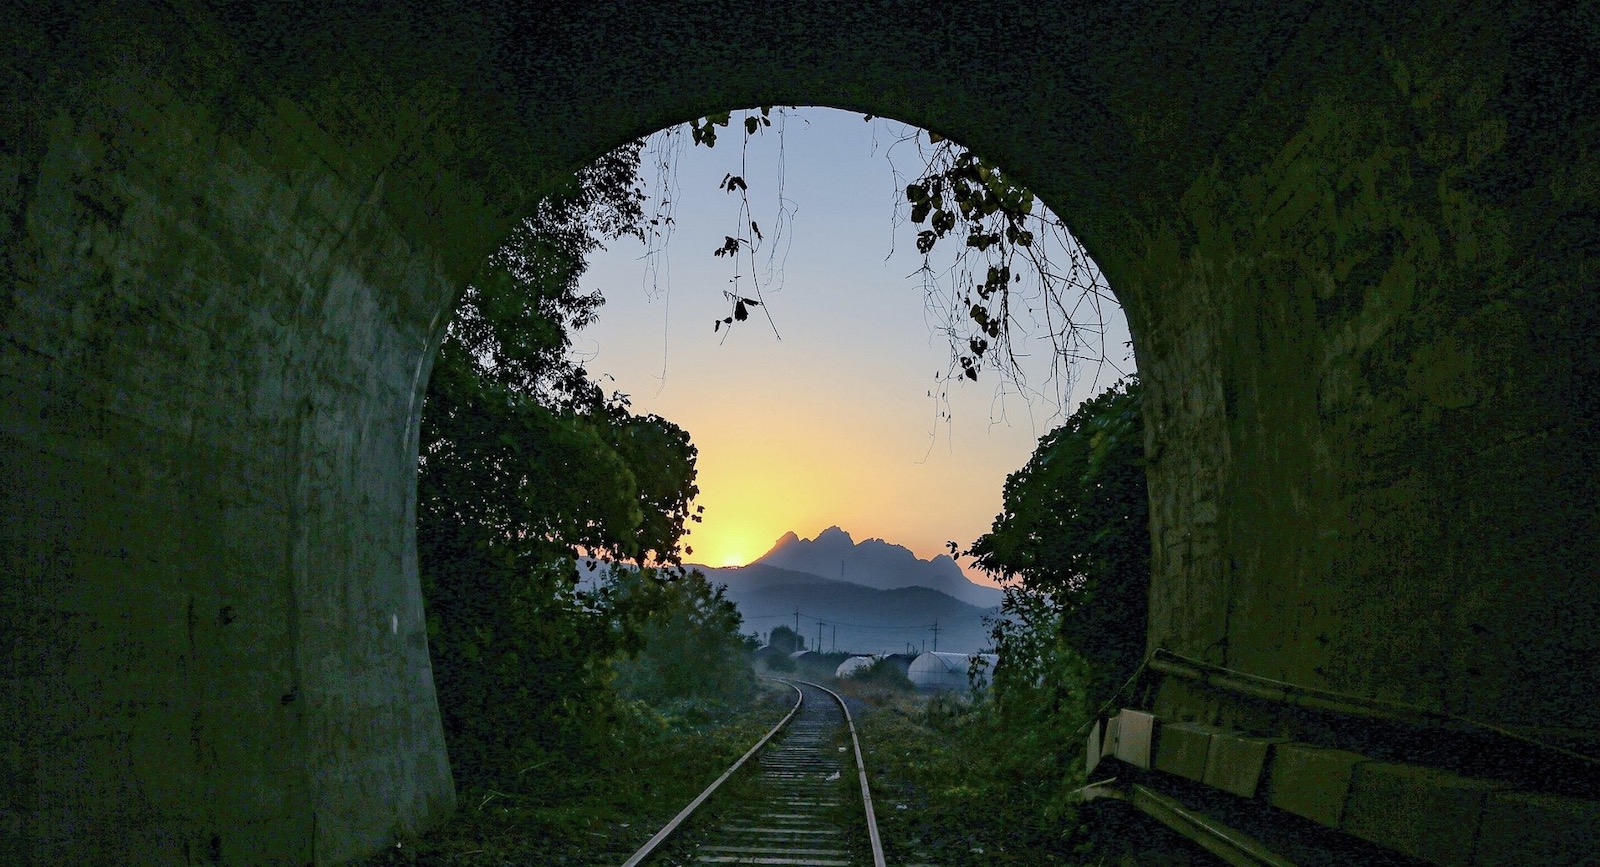 Daybreak at end of dark tunnel signaling a new beginning